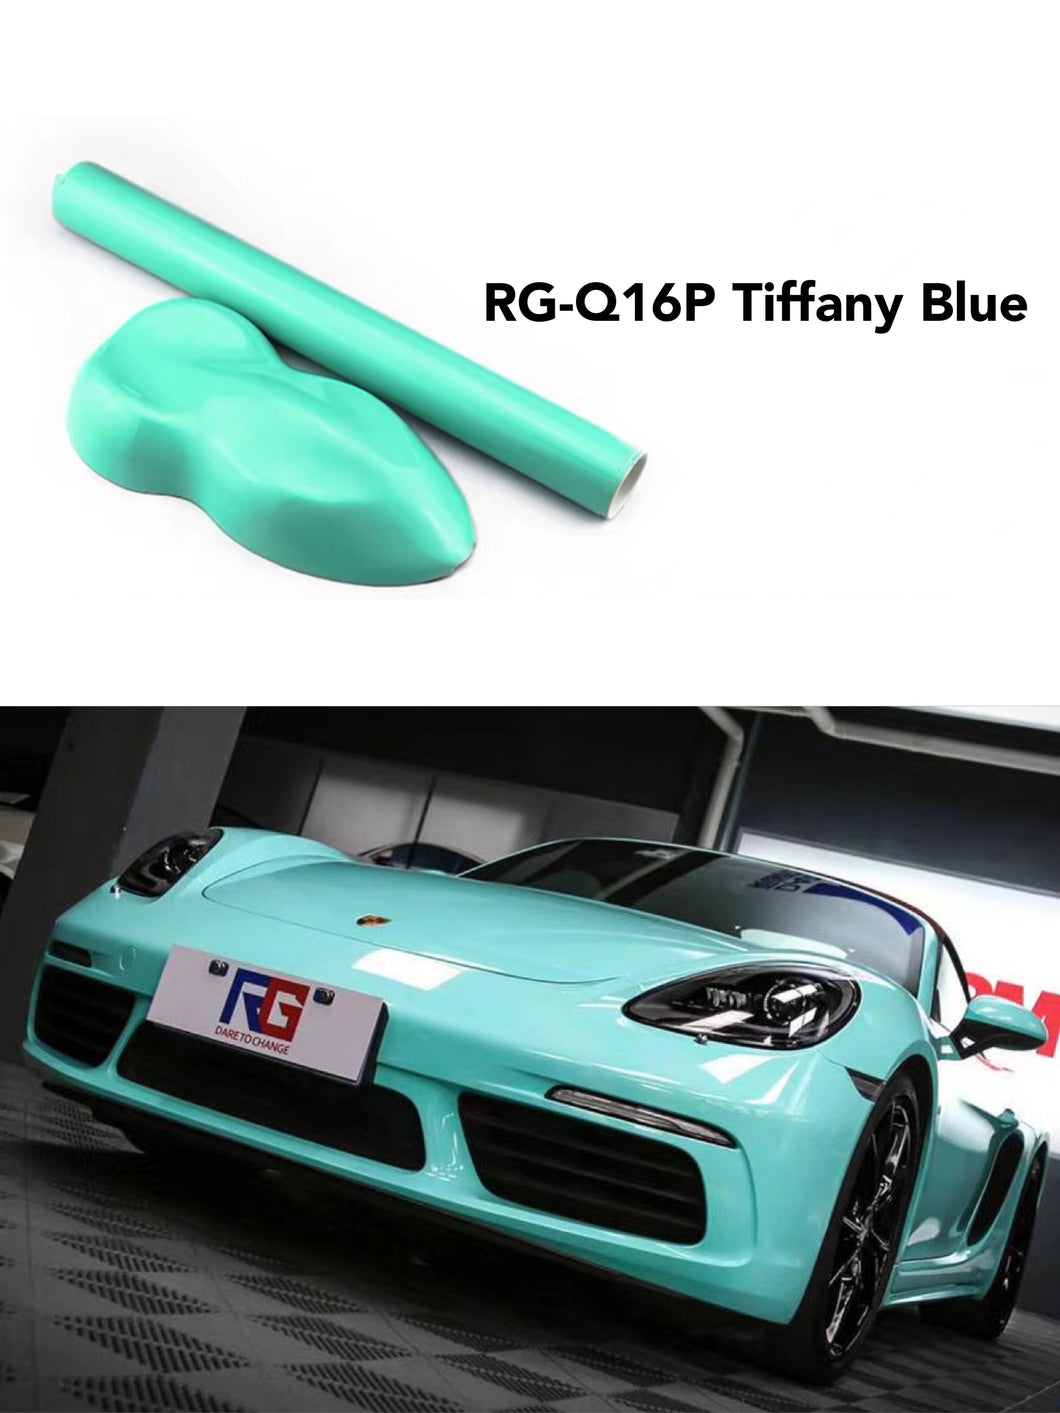 Ultra Gloss Tiffany Blue RG-Q16P